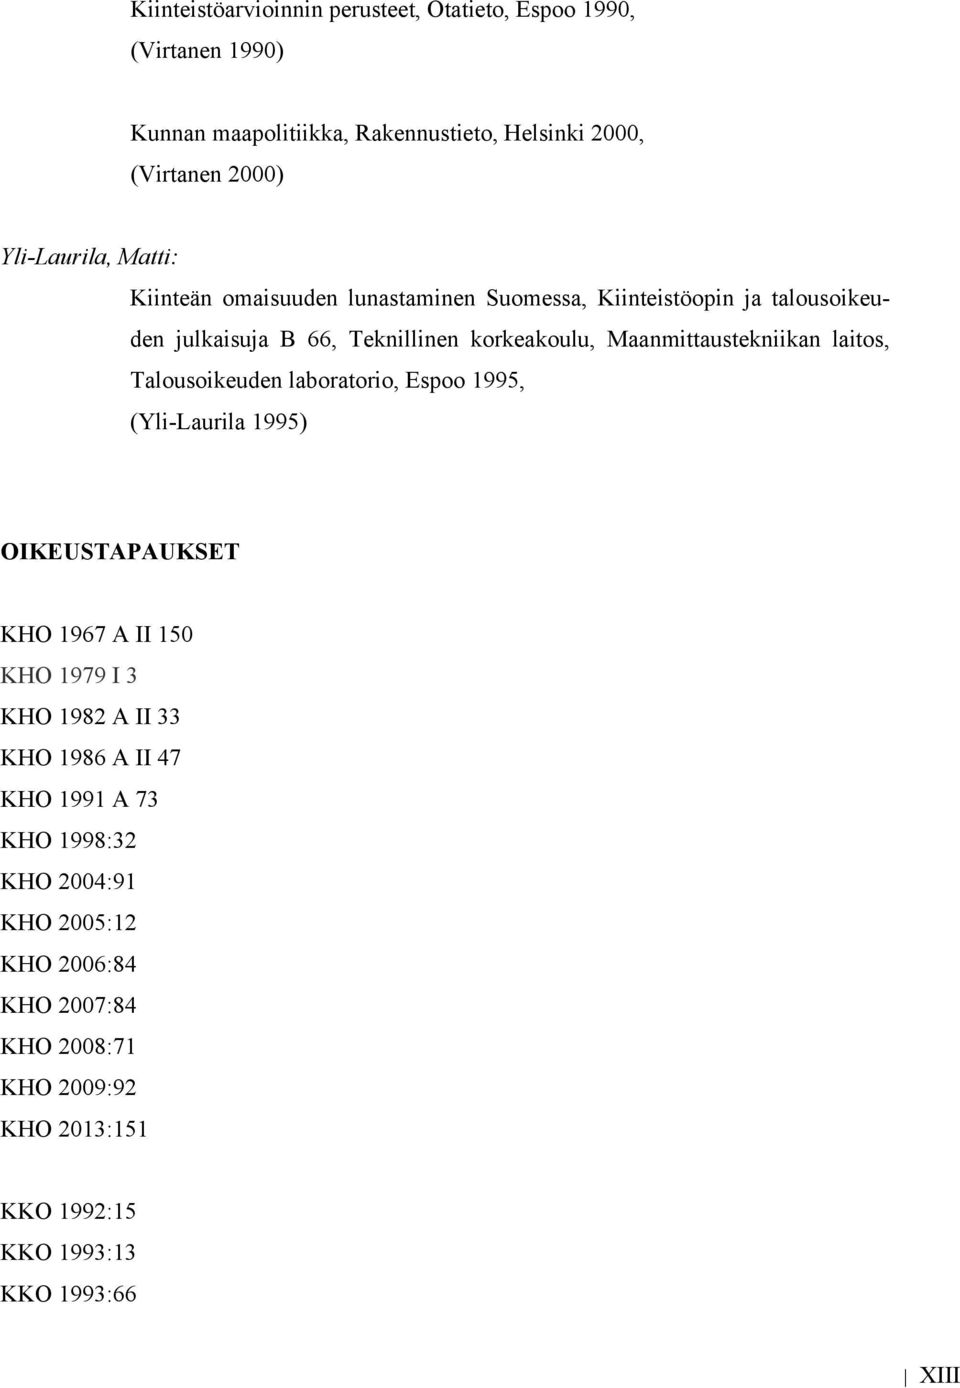 Maanmittaustekniikan laitos, Talousoikeuden laboratorio, Espoo 1995, (Yli-Laurila 1995) OIKEUSTAPAUKSET KHO 1967 A II 150 KHO 1979 I 3 KHO 1982 A II